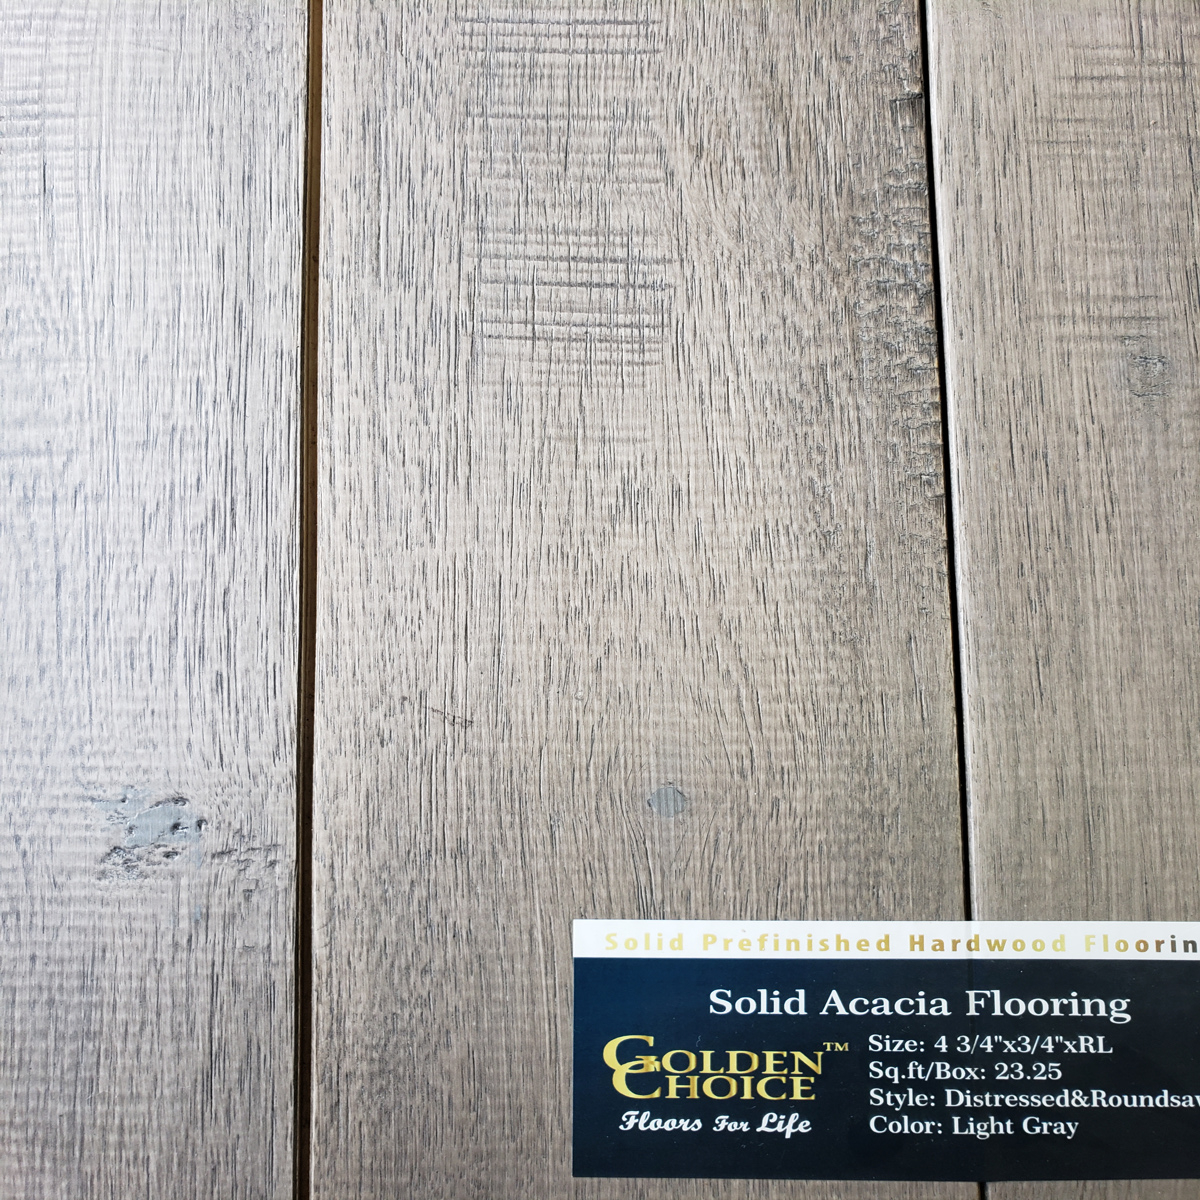 43/4" Light Gray Acacia Solid Hardwood Flooring